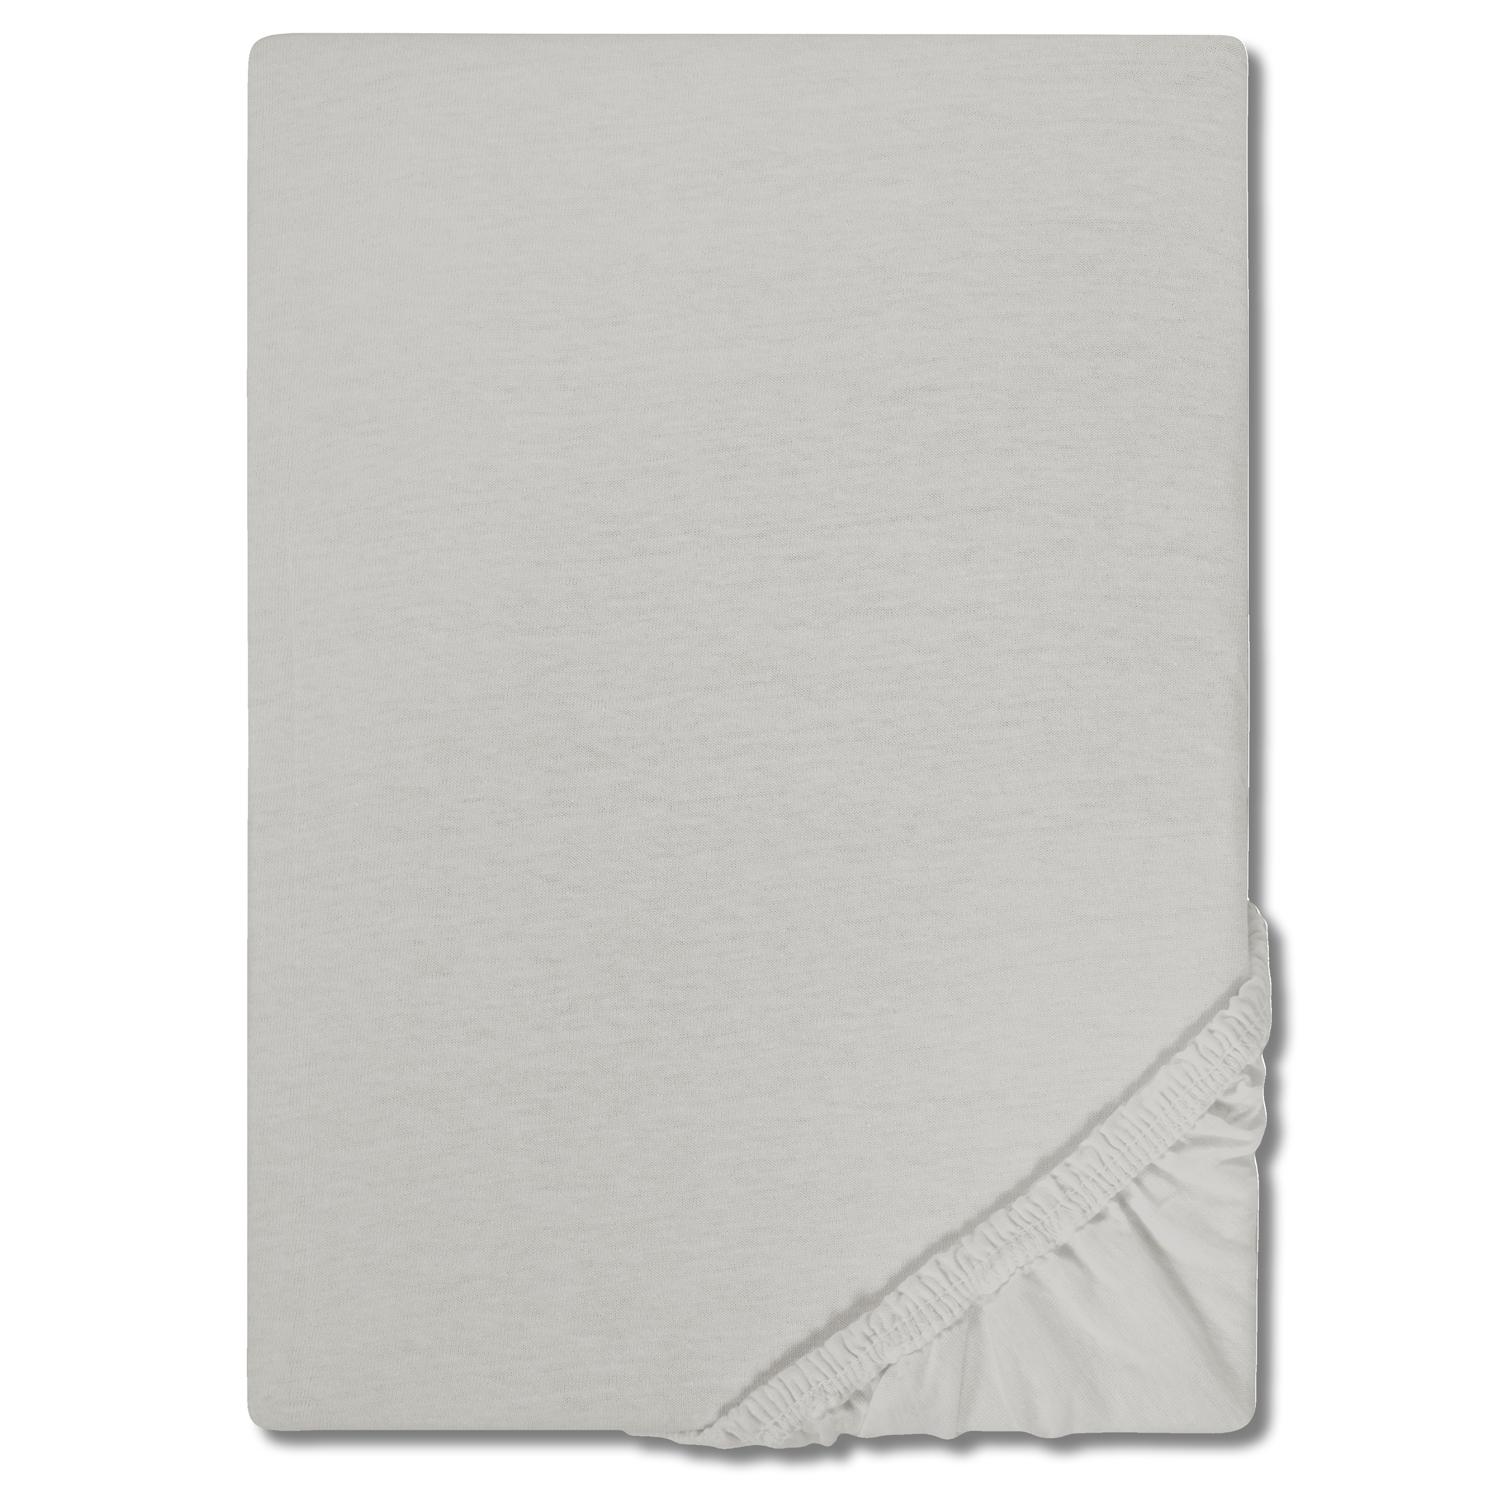 CloudComfort Basic Spannbettlaken Jersey-Stretch silber grau 140 x 190 - 160 x 200 cm